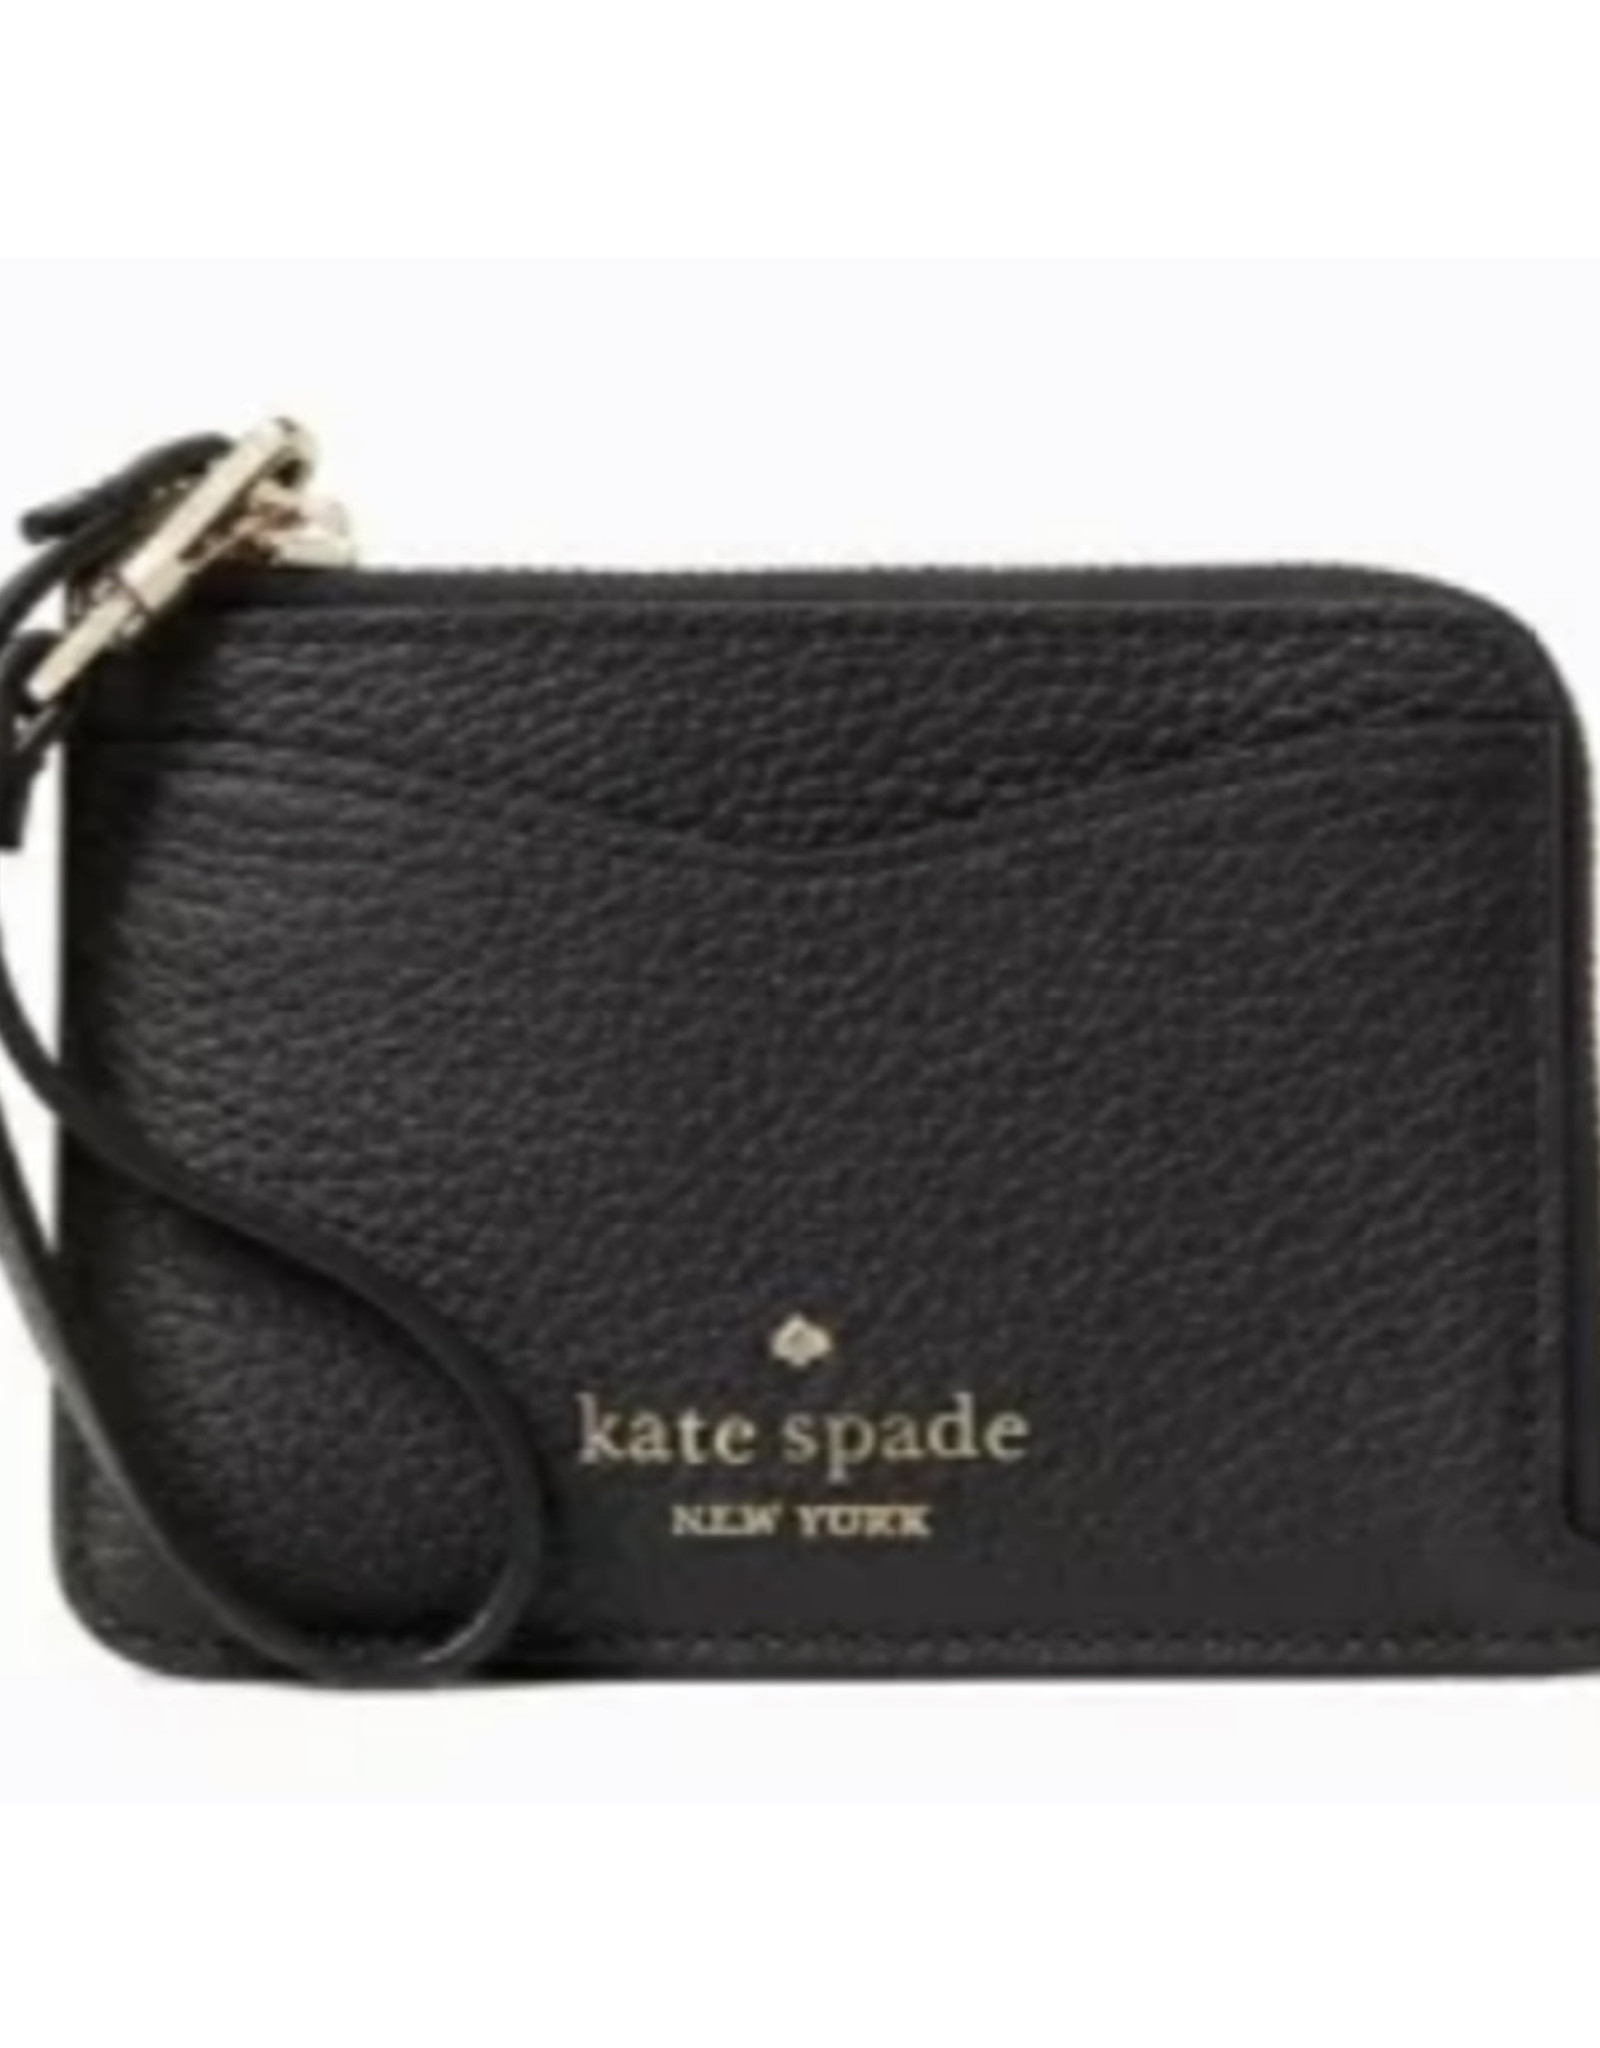 Kate Spade Kate Spade Leila Small Cardholder Wristlet